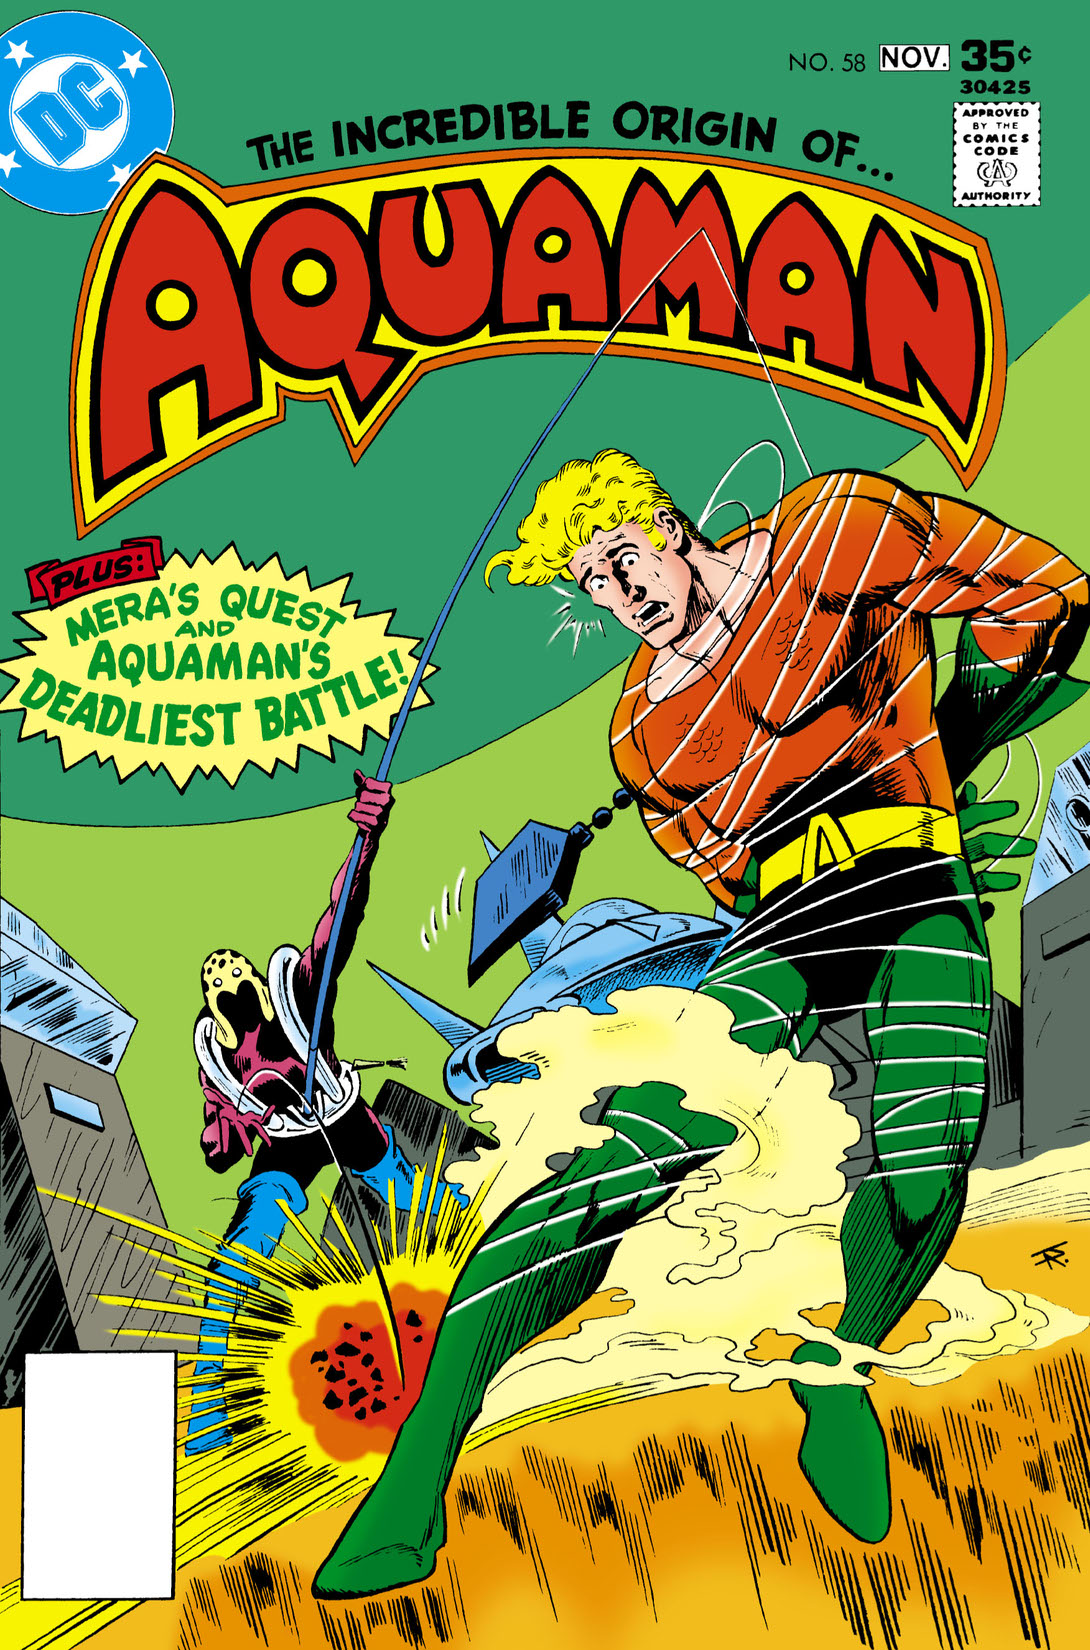 Aquaman (1962-) #58 preview images